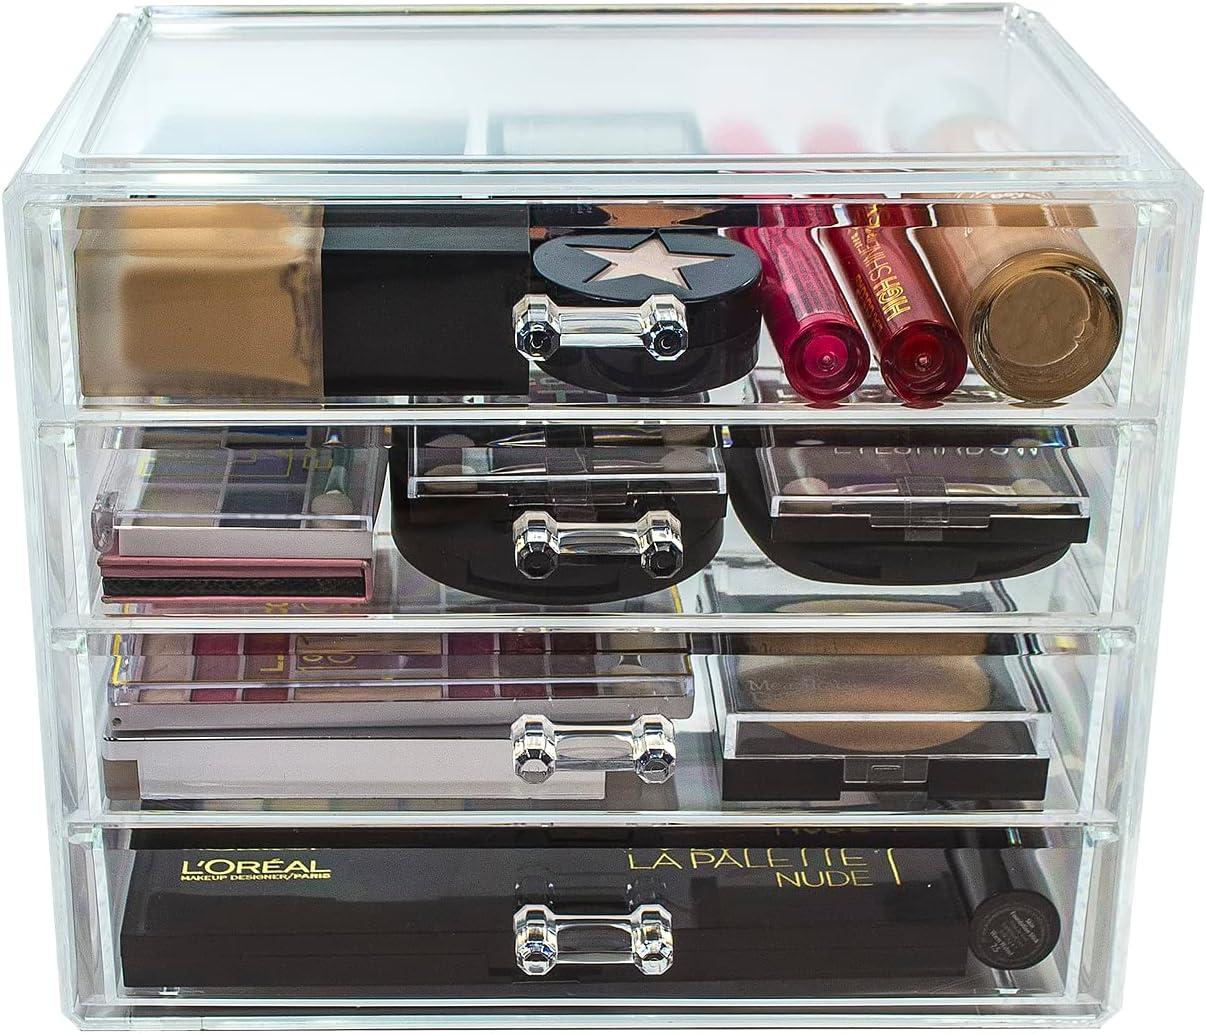 Sorbus Clear Cosmetics Makeup Organizer - Space Saving Acrylic Jewelry &  Make Up Organizers and Storage Display - Stylish Makeup Organizer for  Vanity & Bathroom Organization (4 Medium Drawers)